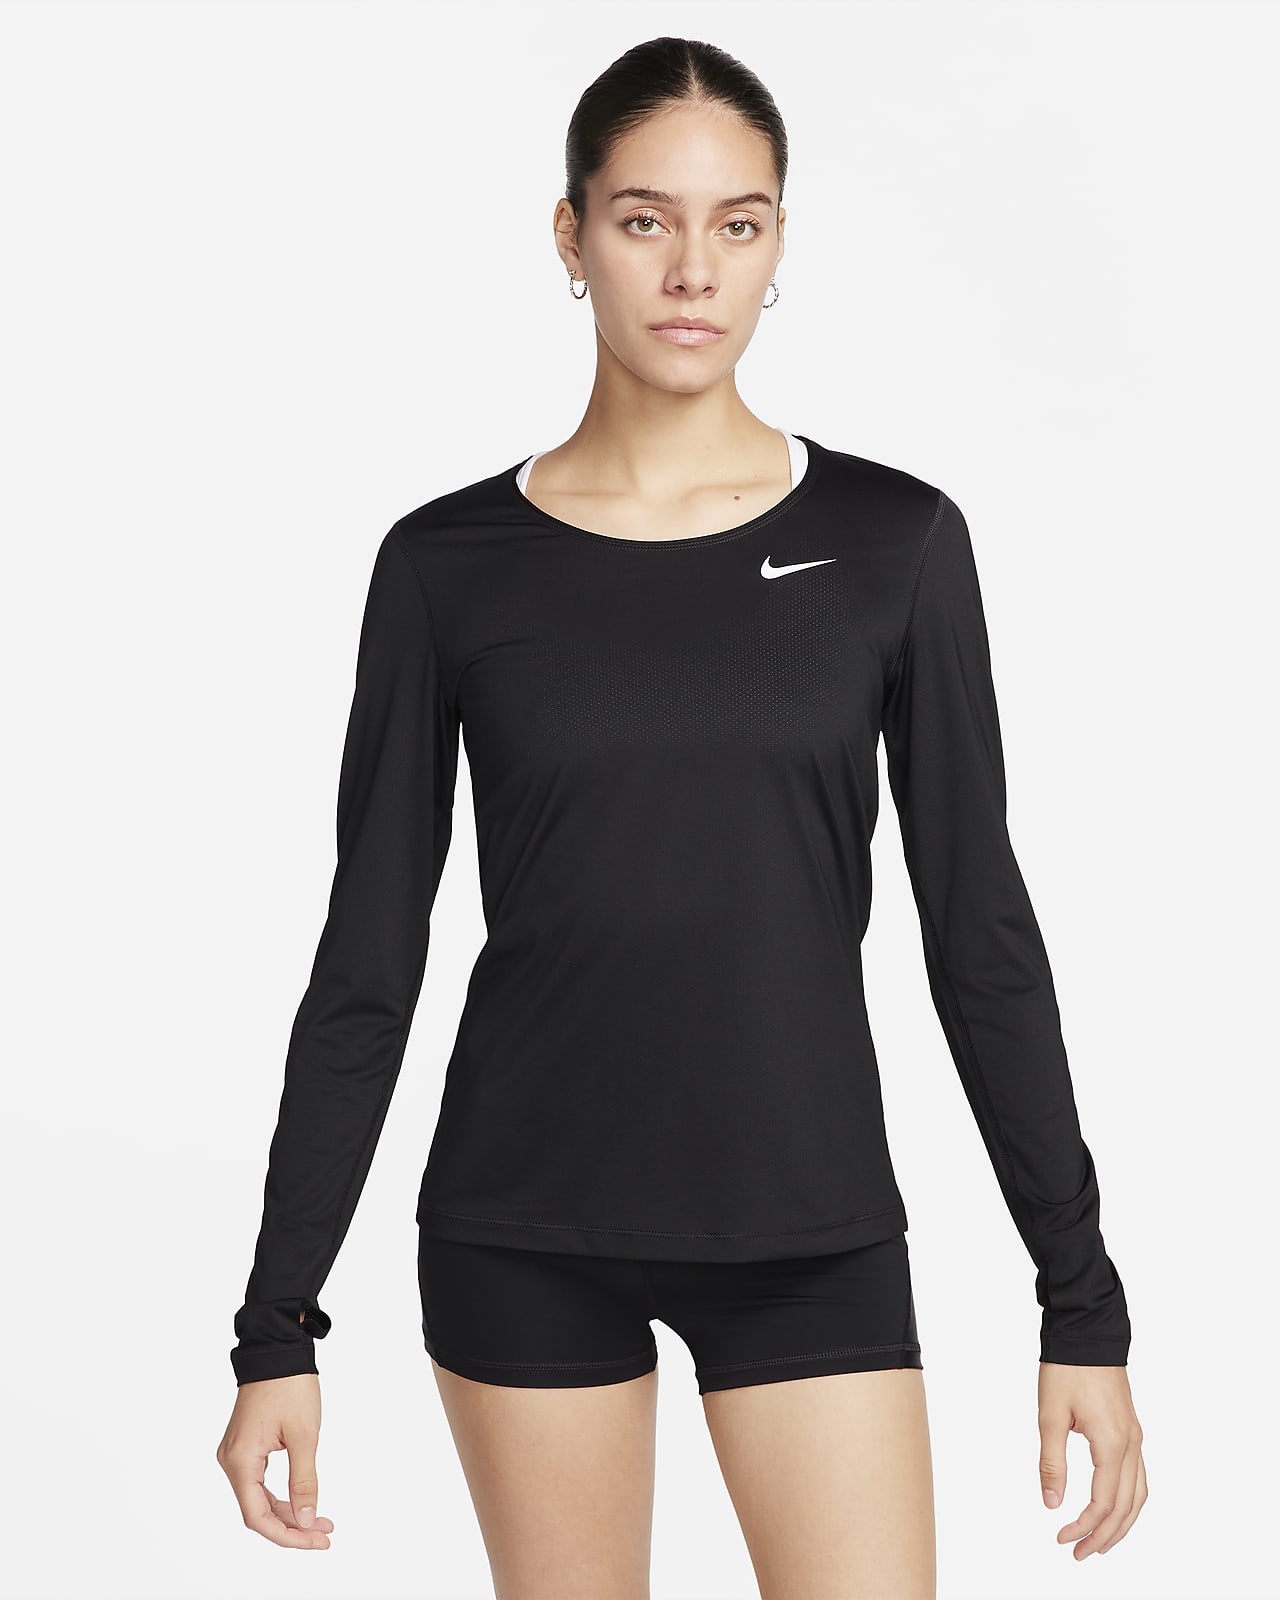 NIKE Hypercool Nike Pro Combat Dri Fit Long Sleeve Shirt Purple Gray  Women's S